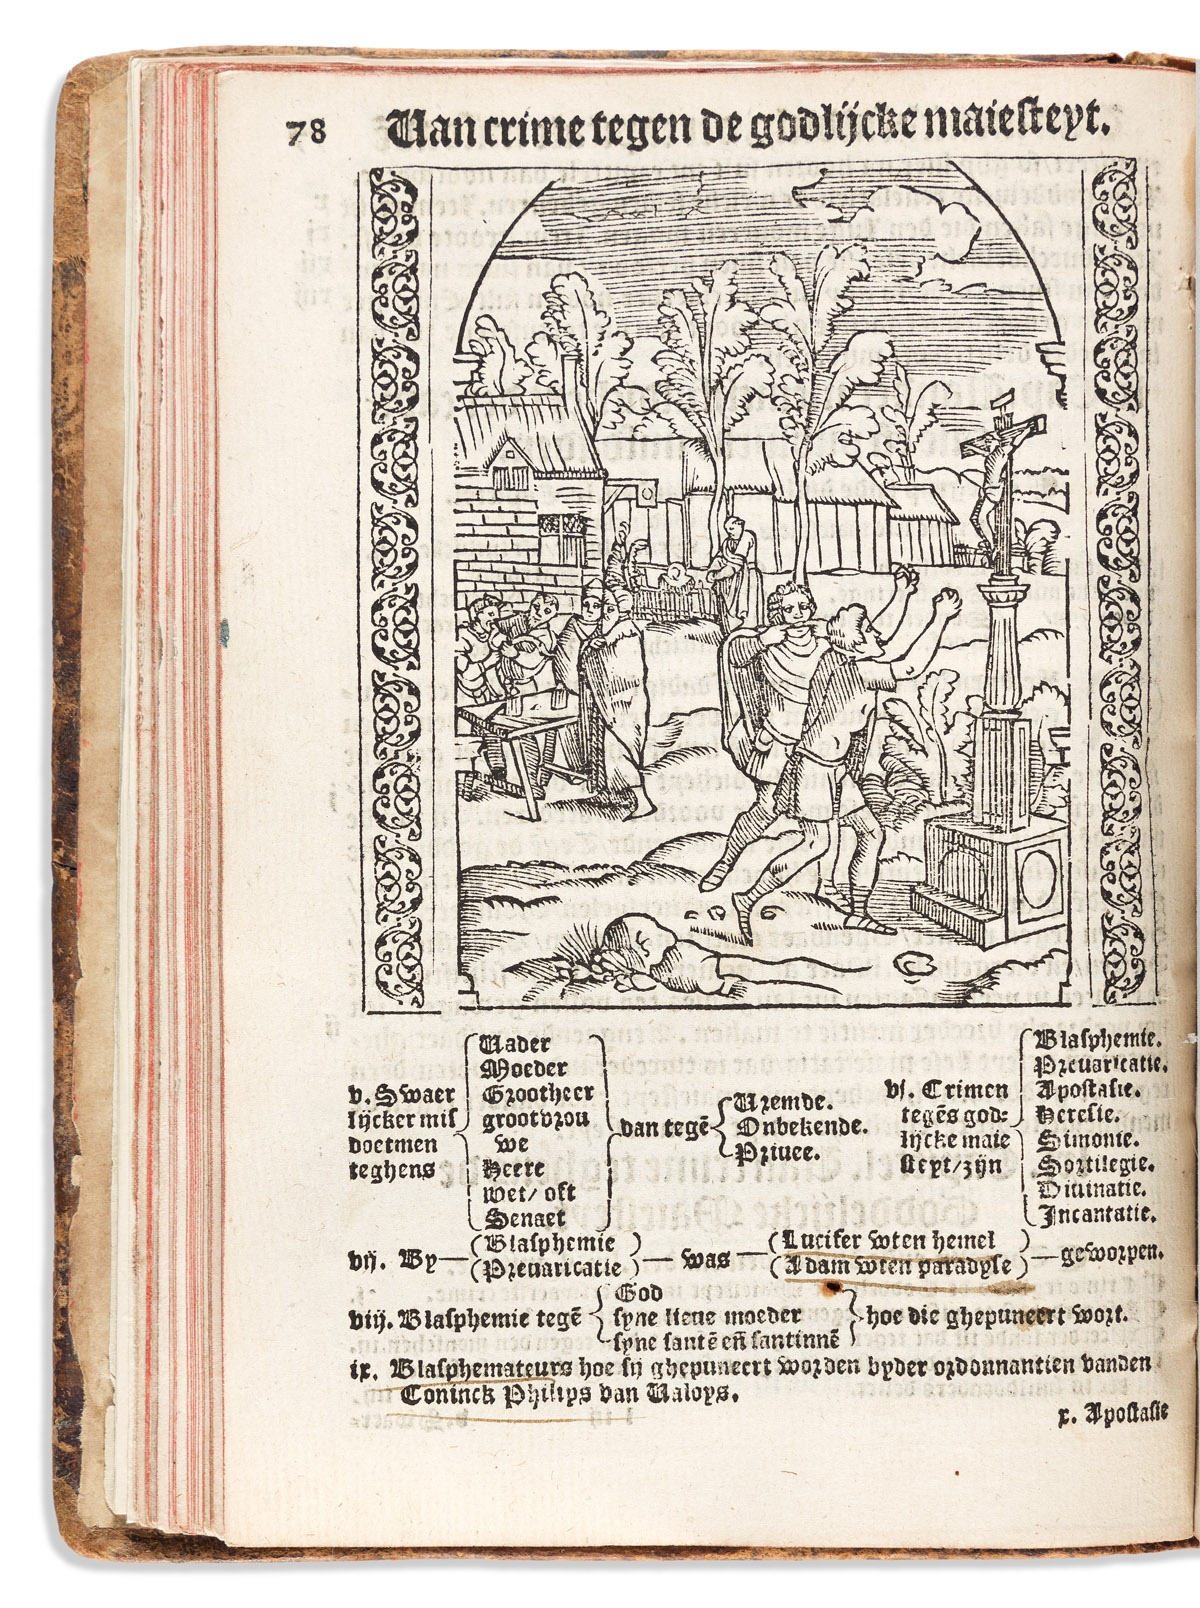 Damhoudere, Joos de (1507-1581) Practijcke ende Hantboeck in Criminele Saken.